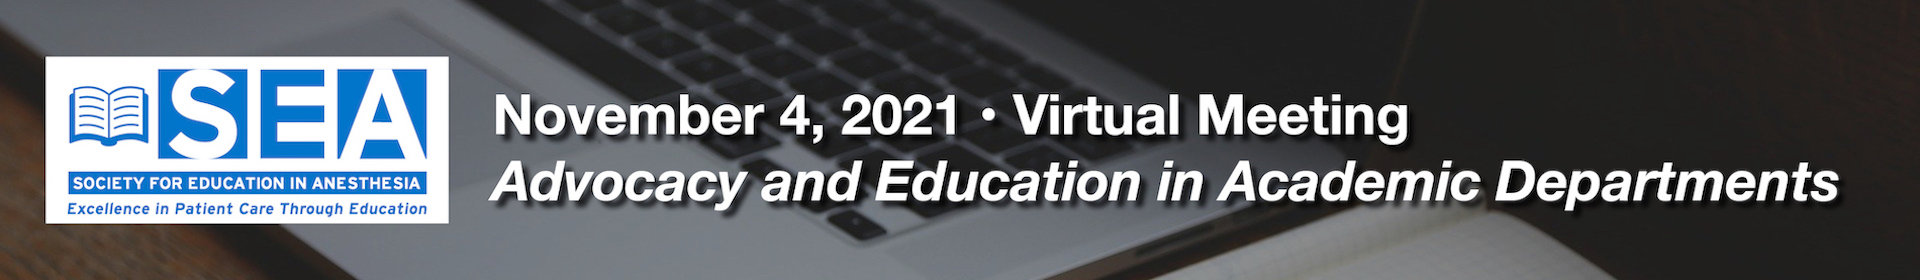 SEA Fall Meeting 2021 - Virtual Event Banner